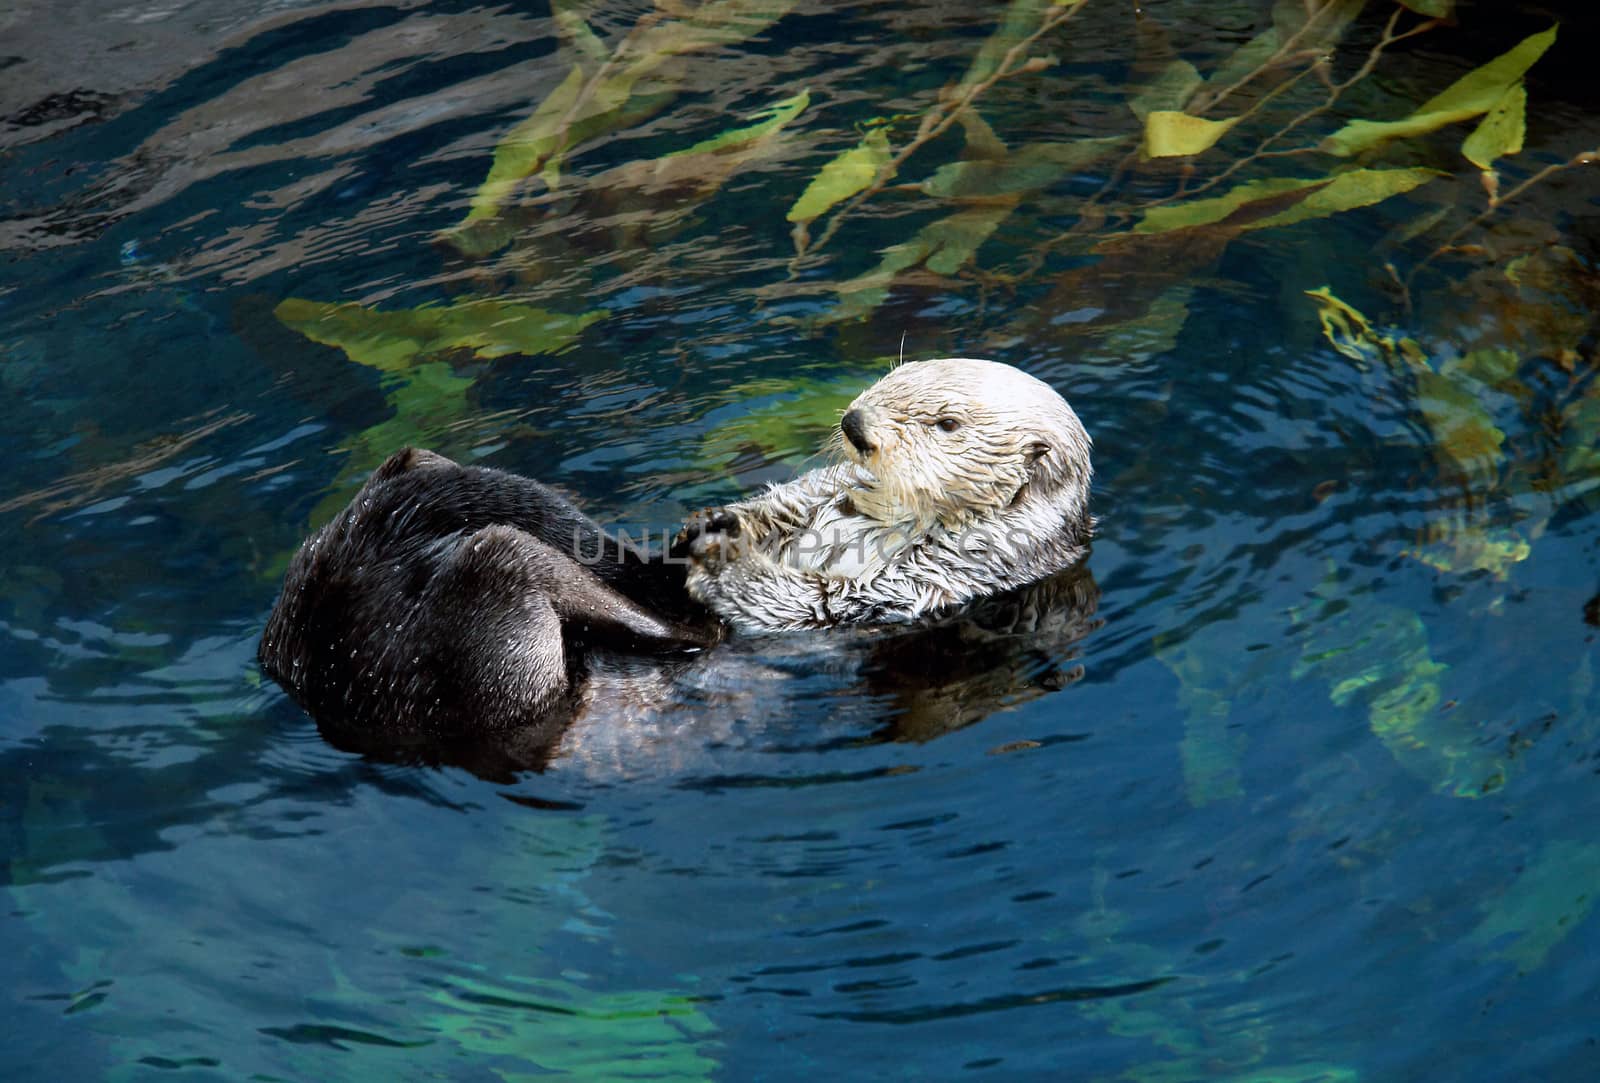  Sea otter swiming (Scientiphic name: Enhydra lutris)                       